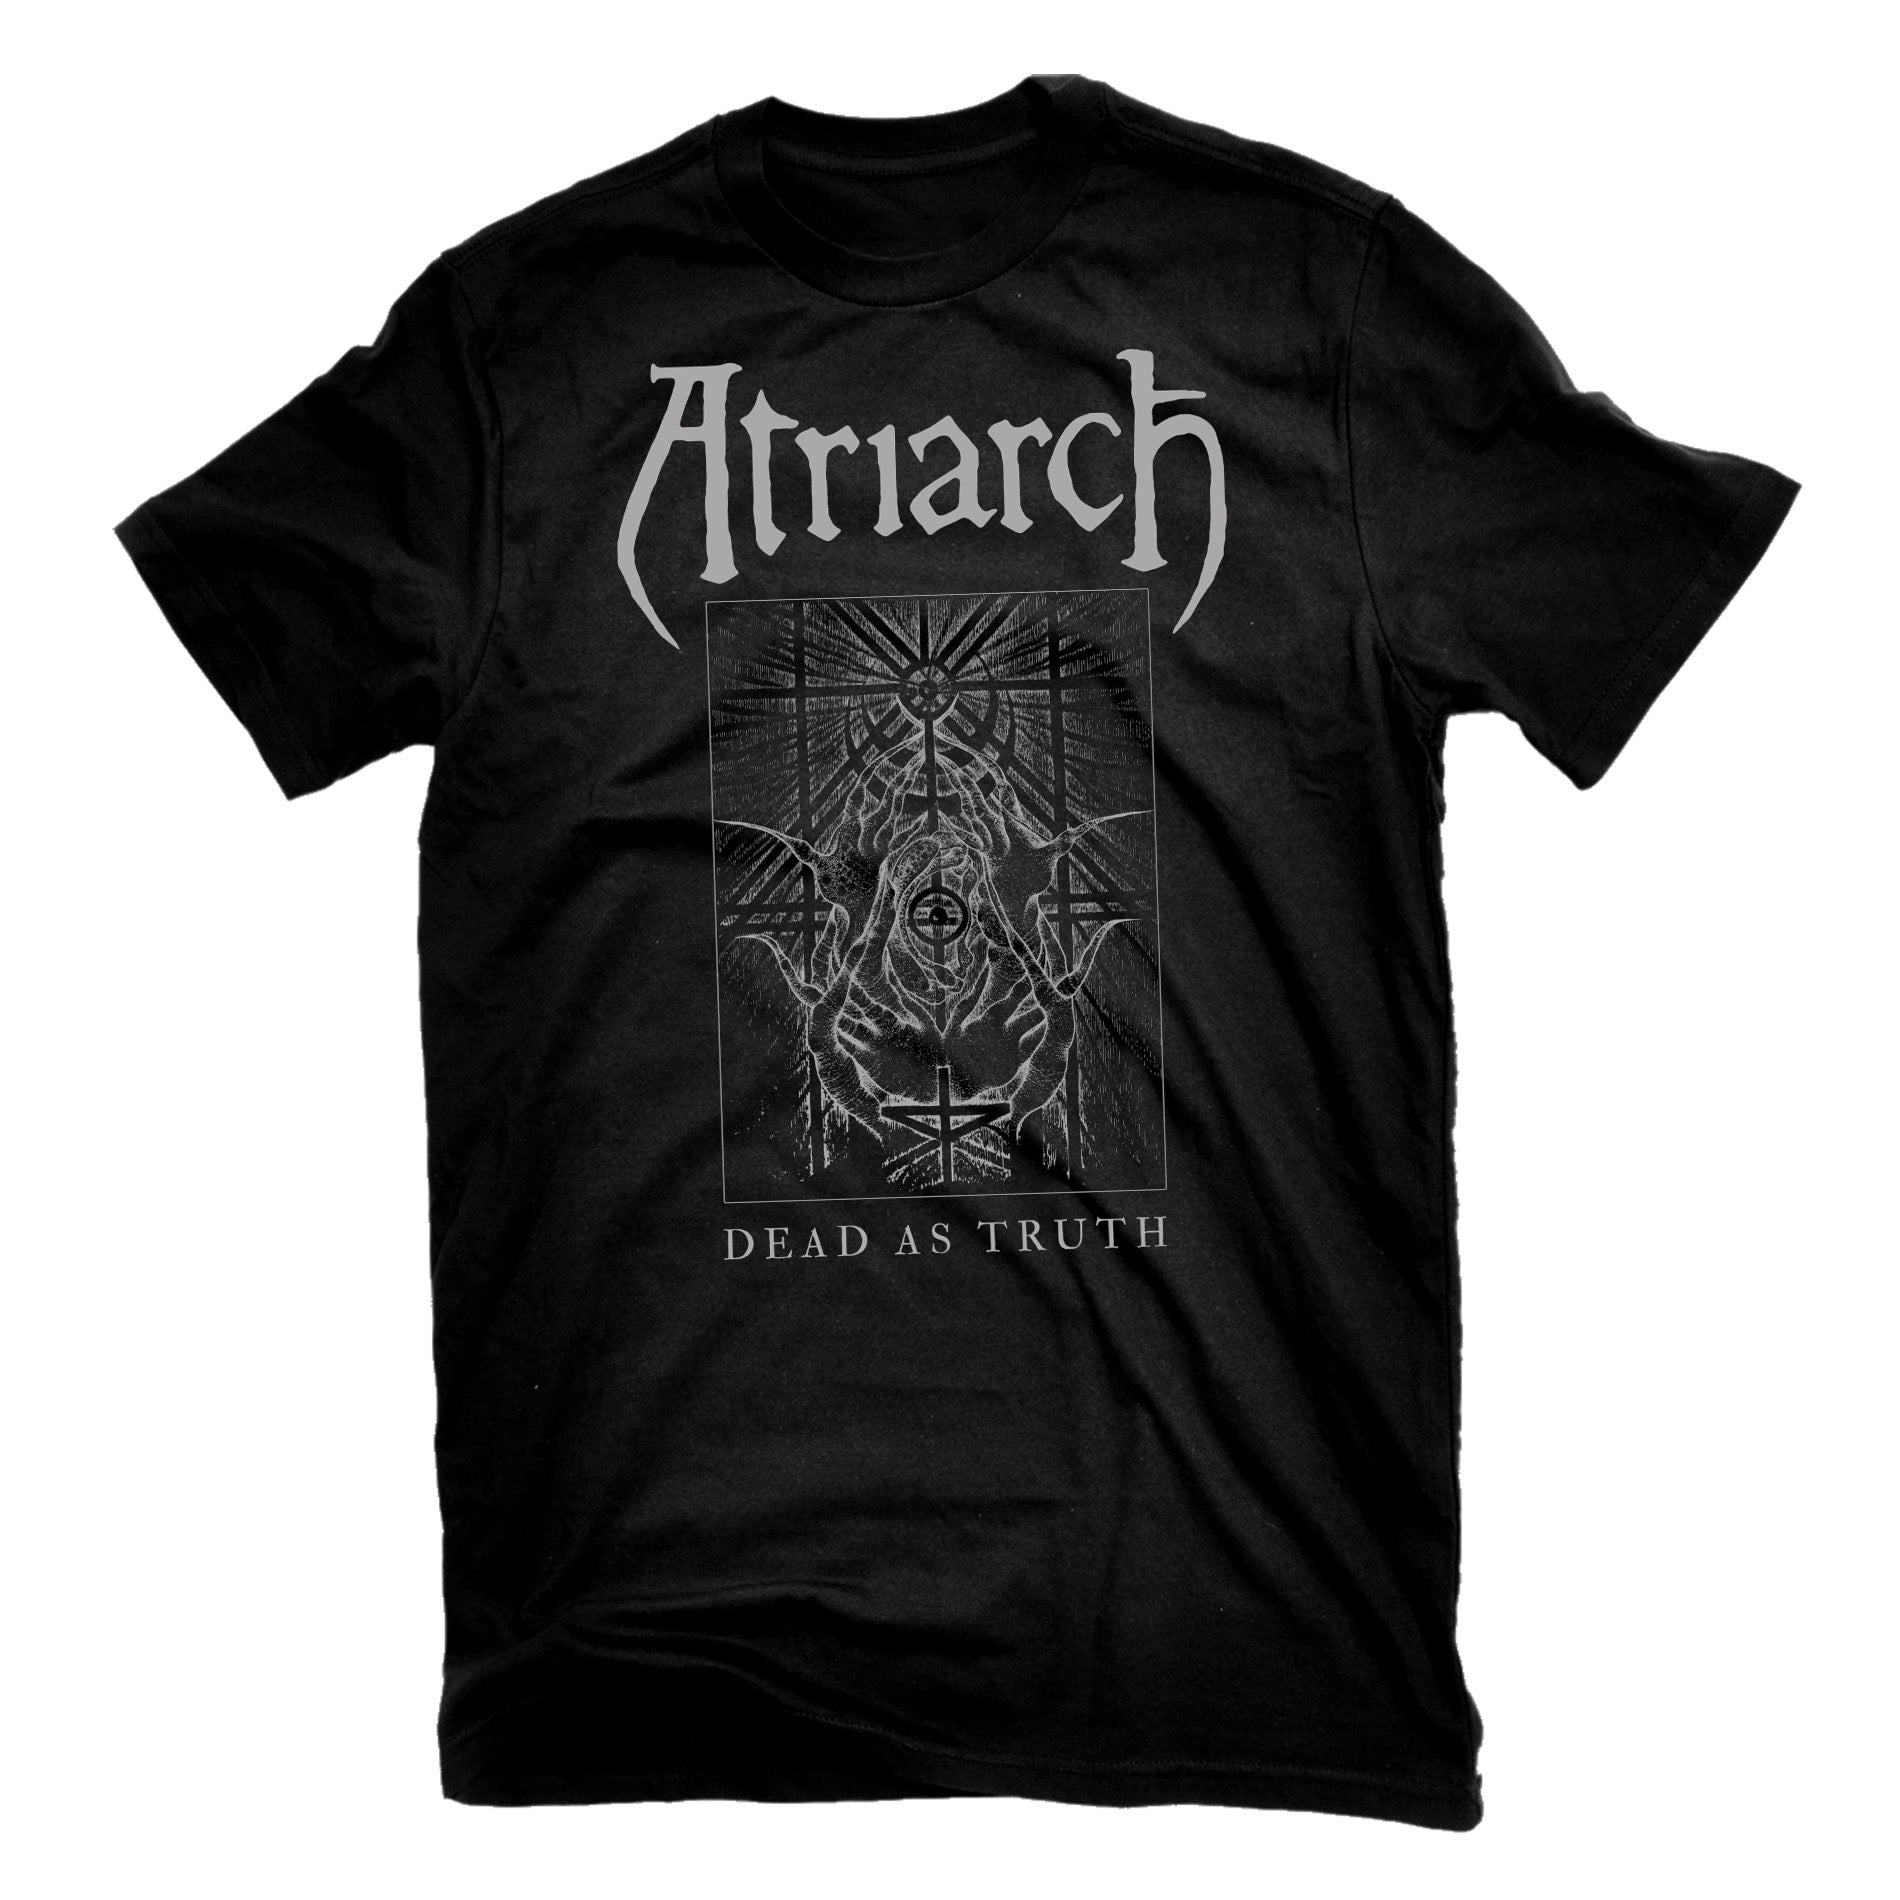 Atriarch "Dead as Truth" T-Shirt